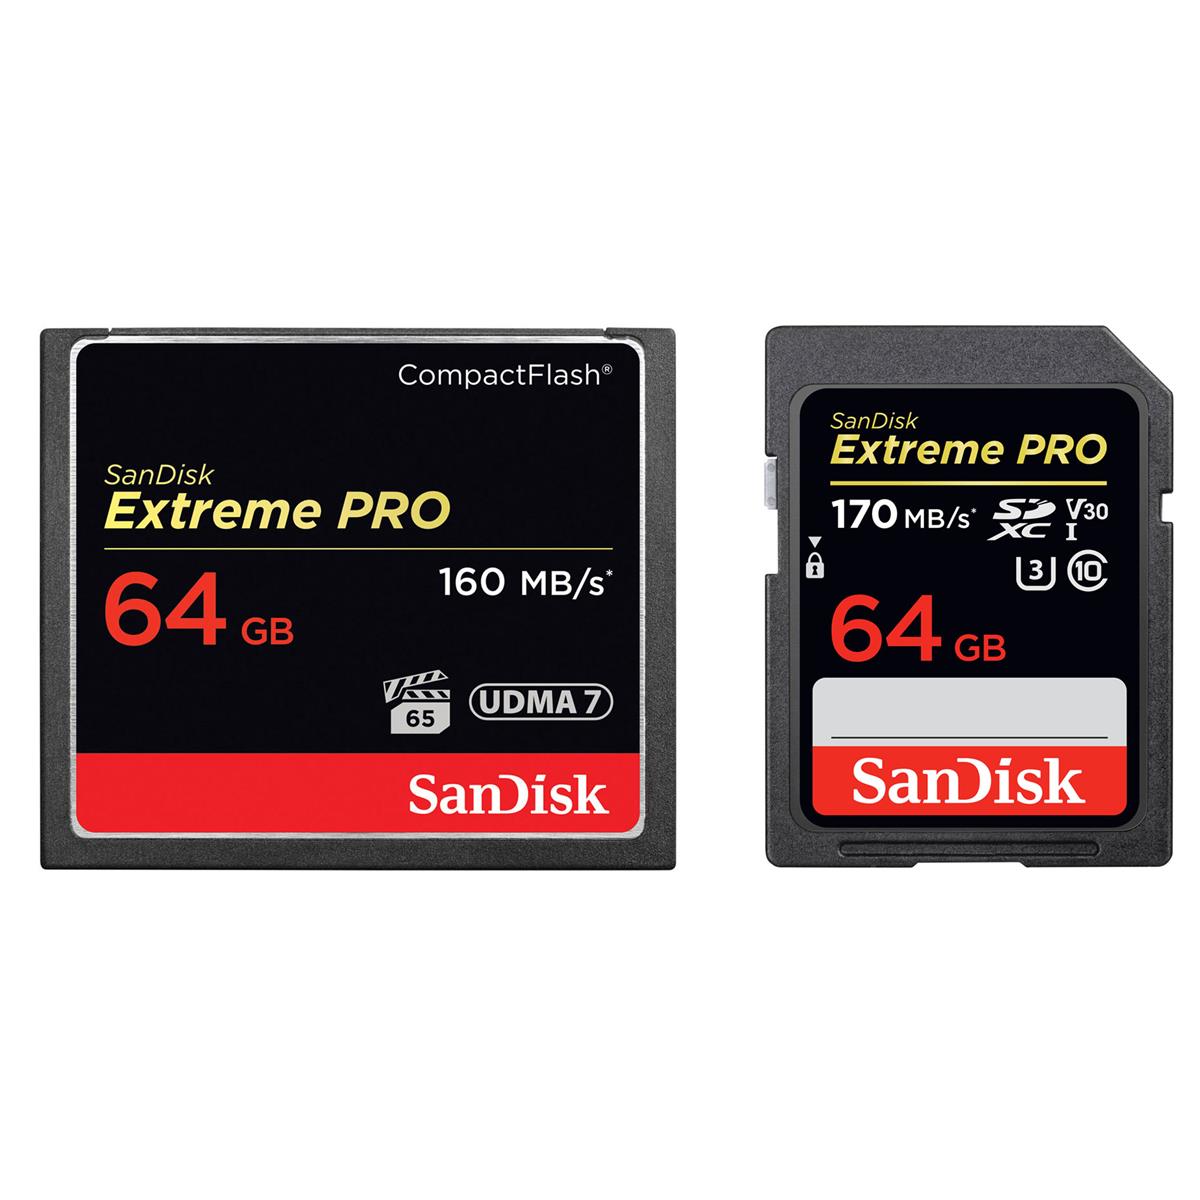 Image of SanDisk 64GB Extreme PRO CompactFlash Card - with SanDisk Extreme PRO SD card